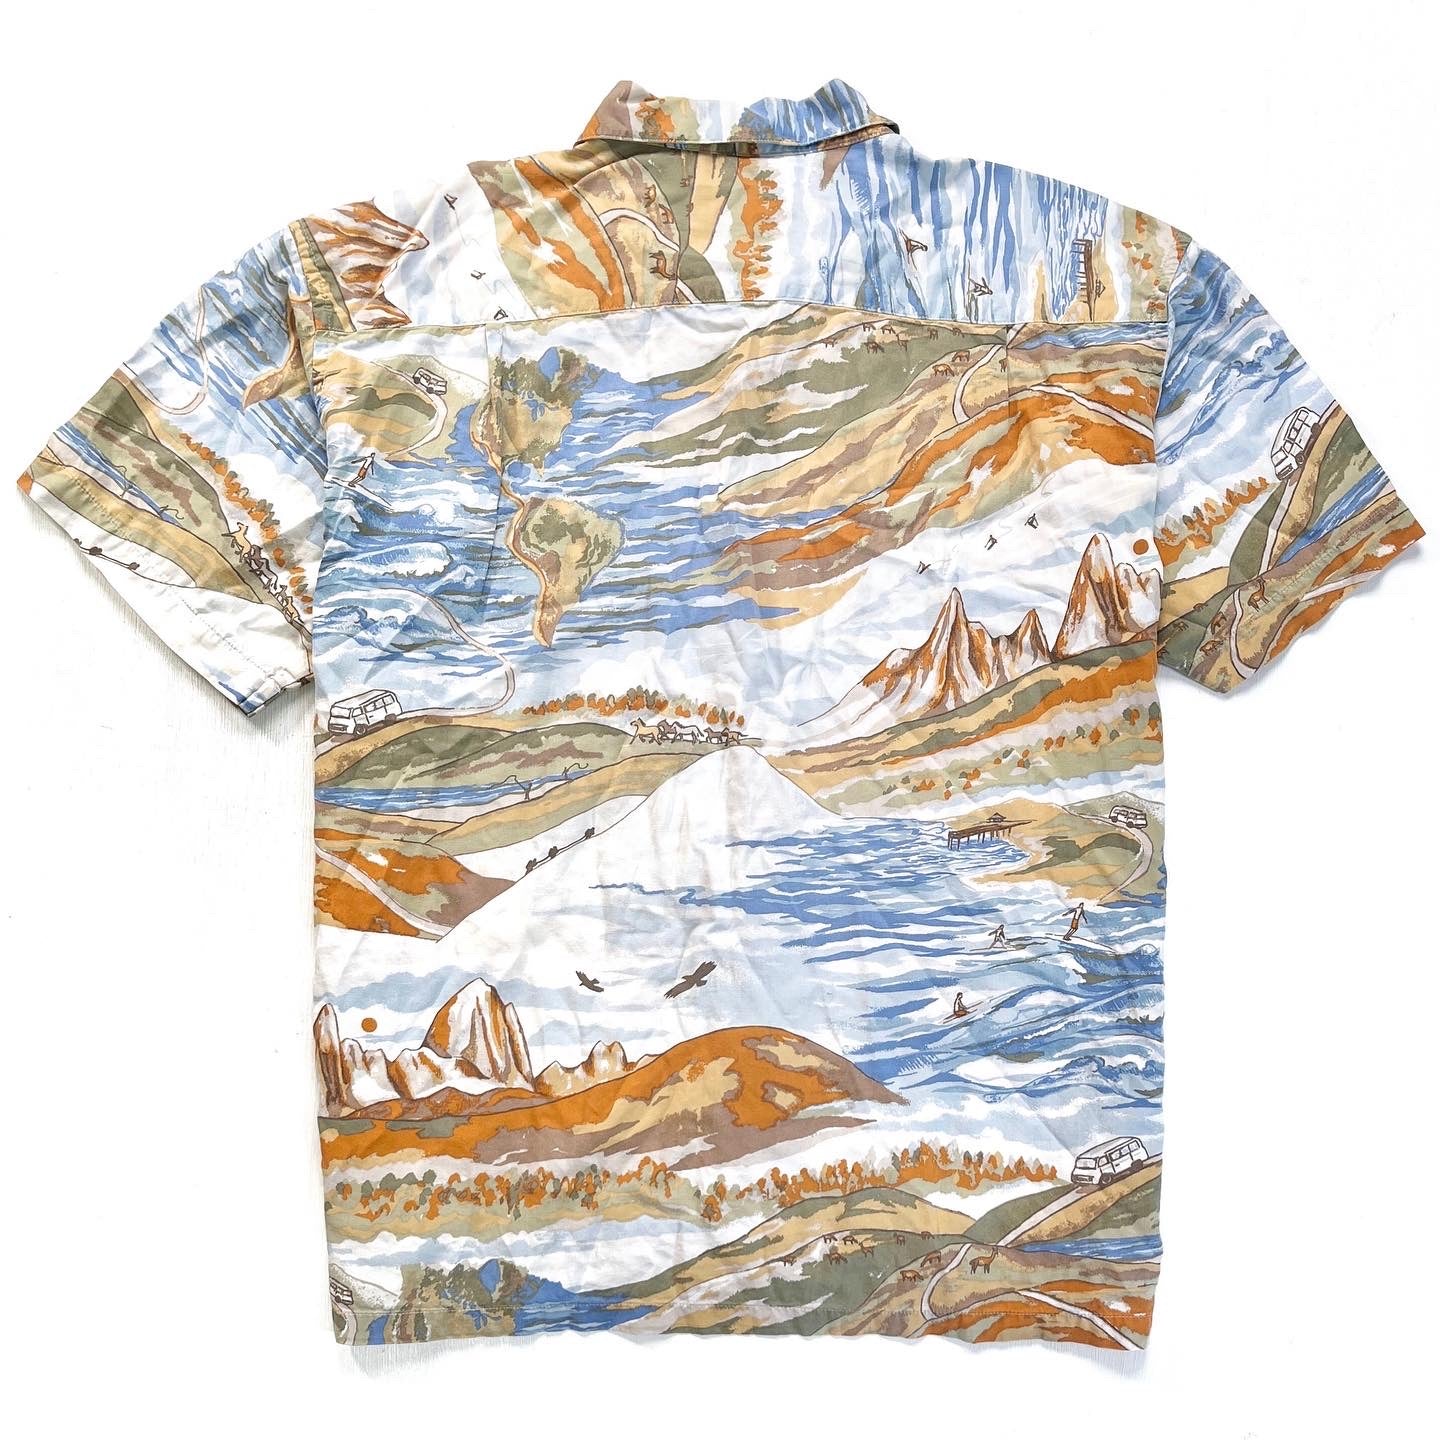 2009 Patagonia Mens Pataloha Print Shirt, Mountain of Storms (XL)